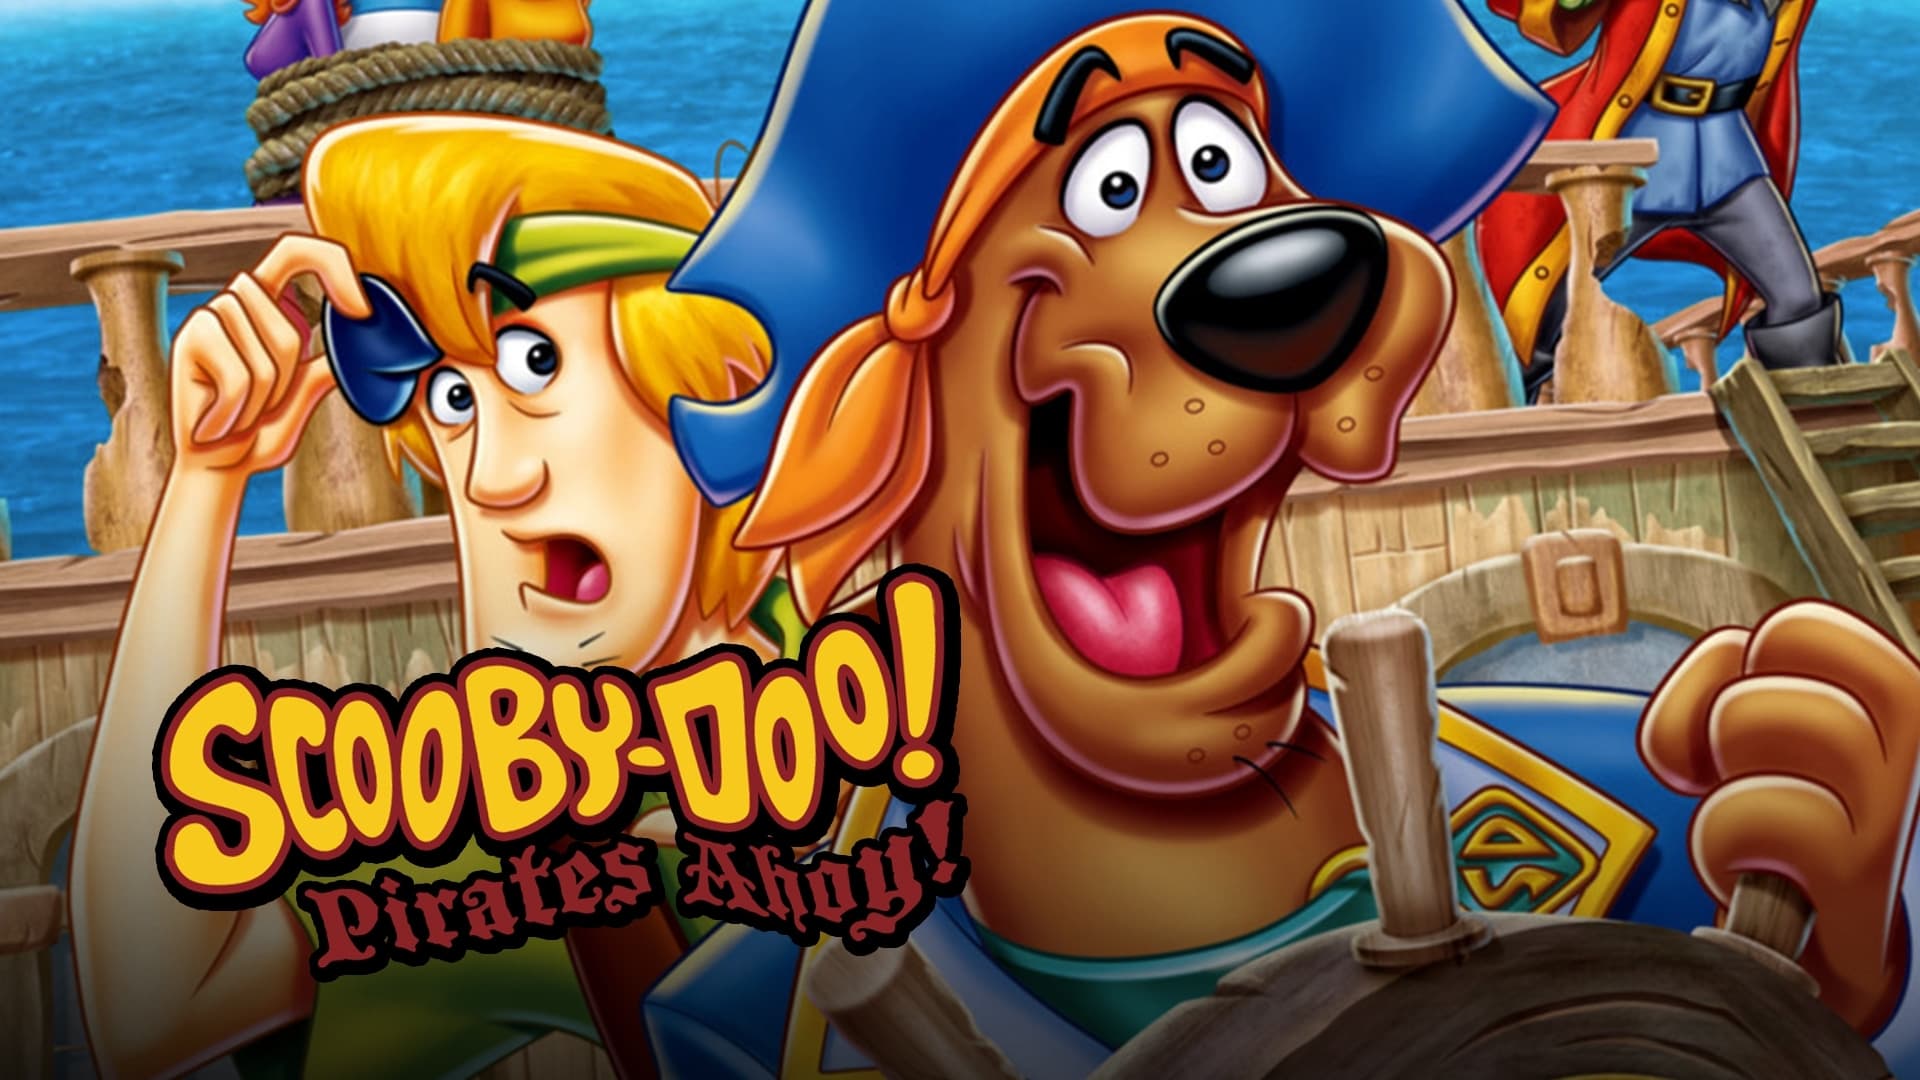 ¡Scooby-Doo! ¡Piratas a babor! (2006)